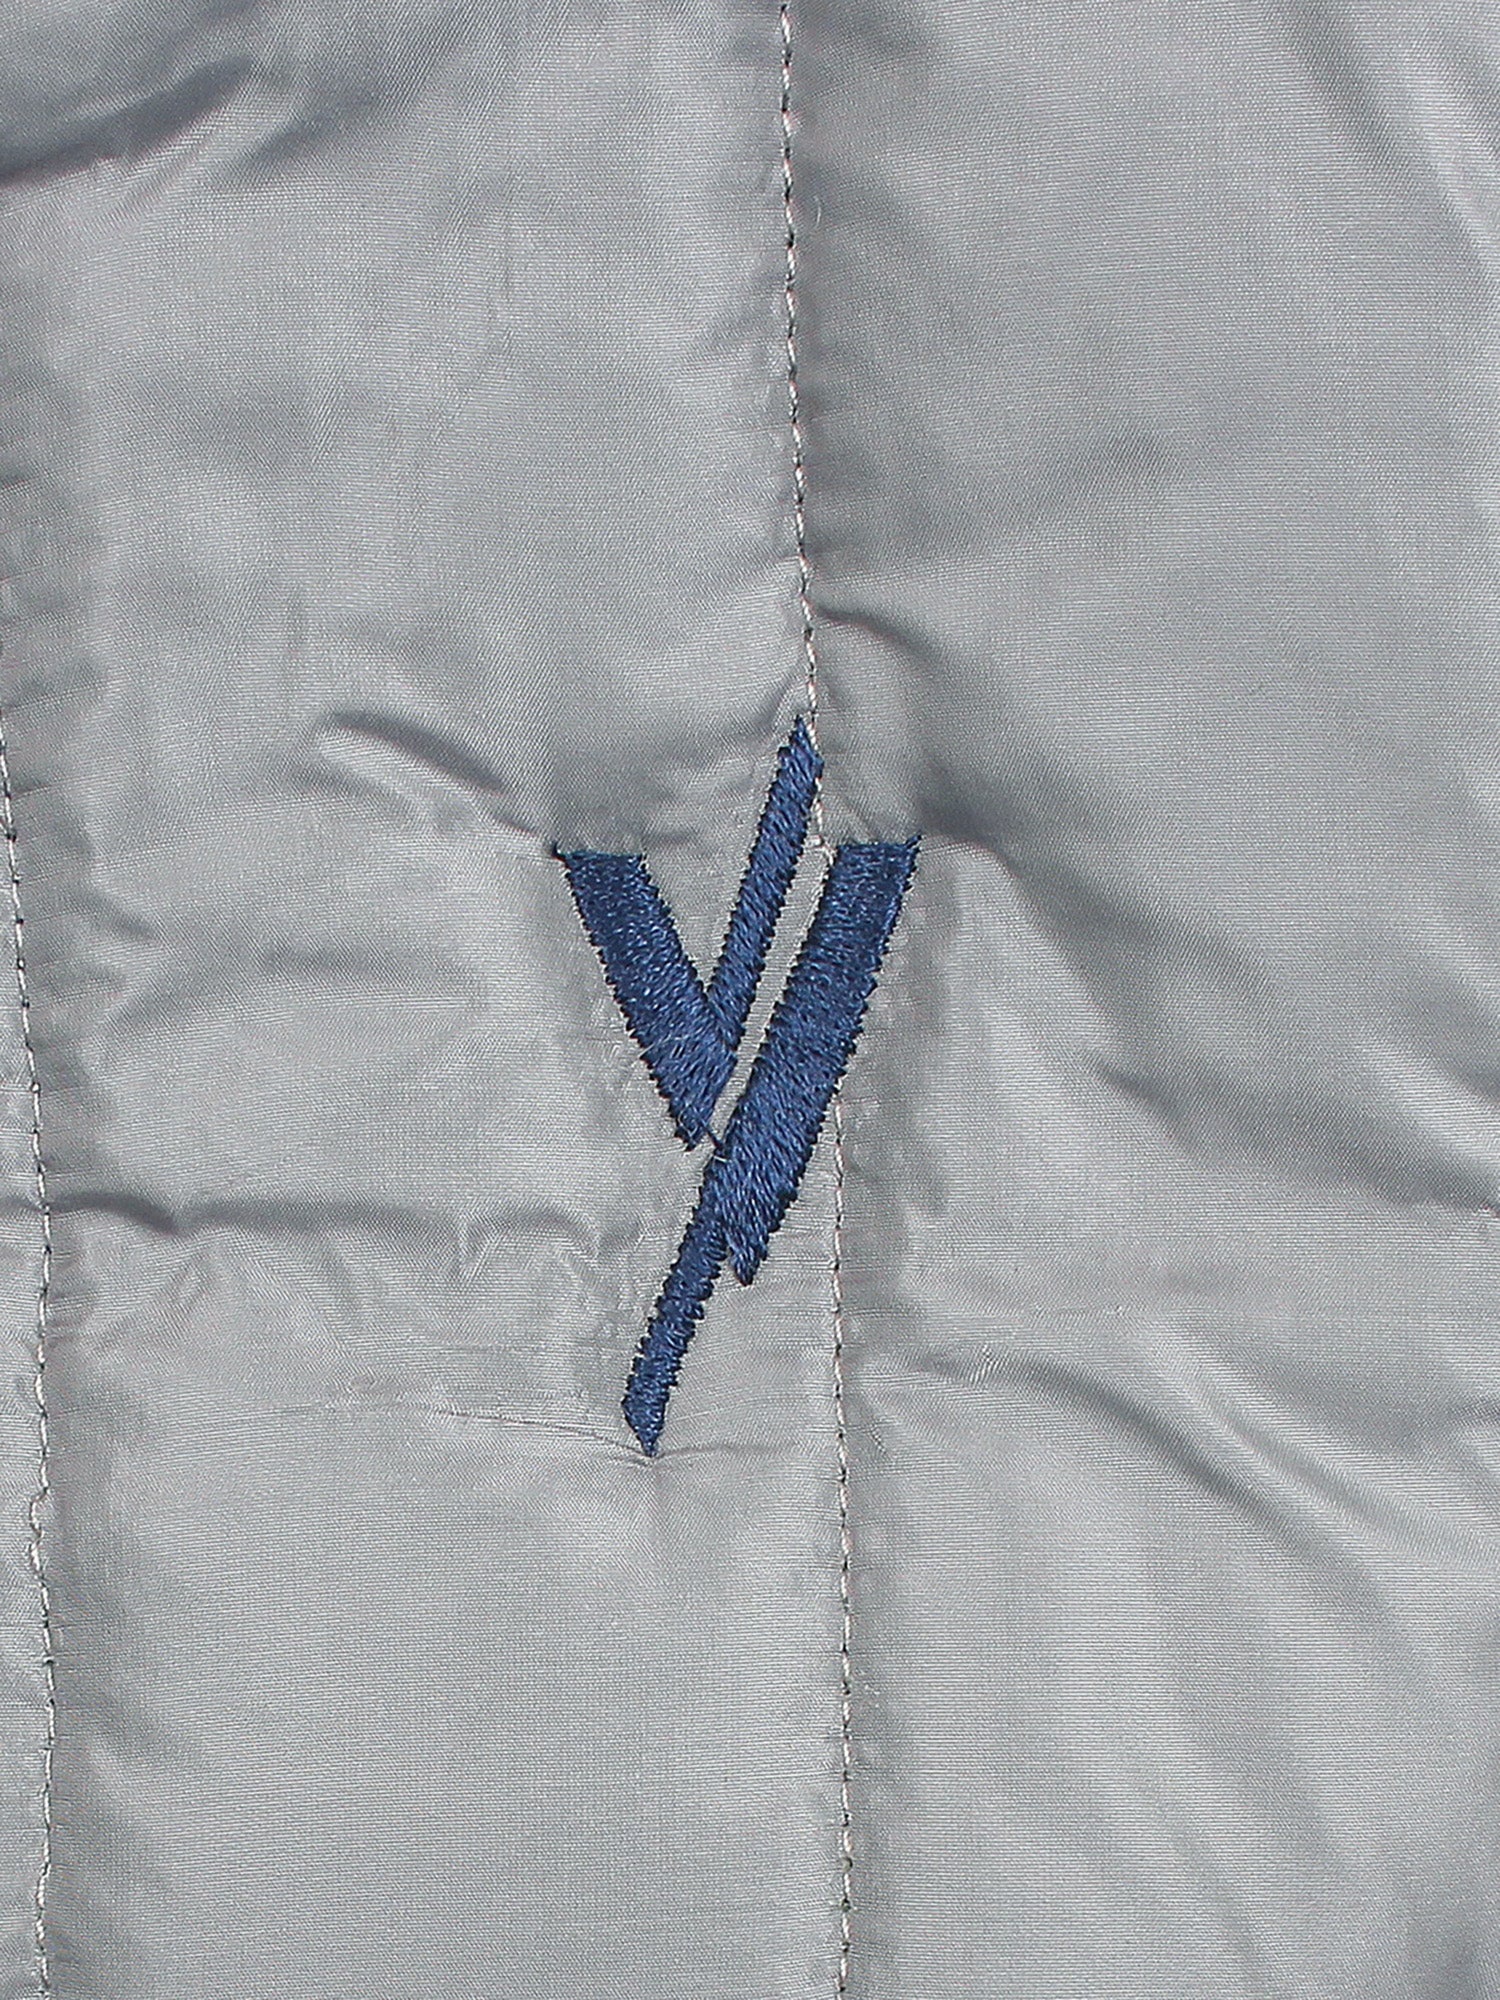 Full Sleeves Puffer Jacket Boys & Girls VJ08-A Grey/Navy